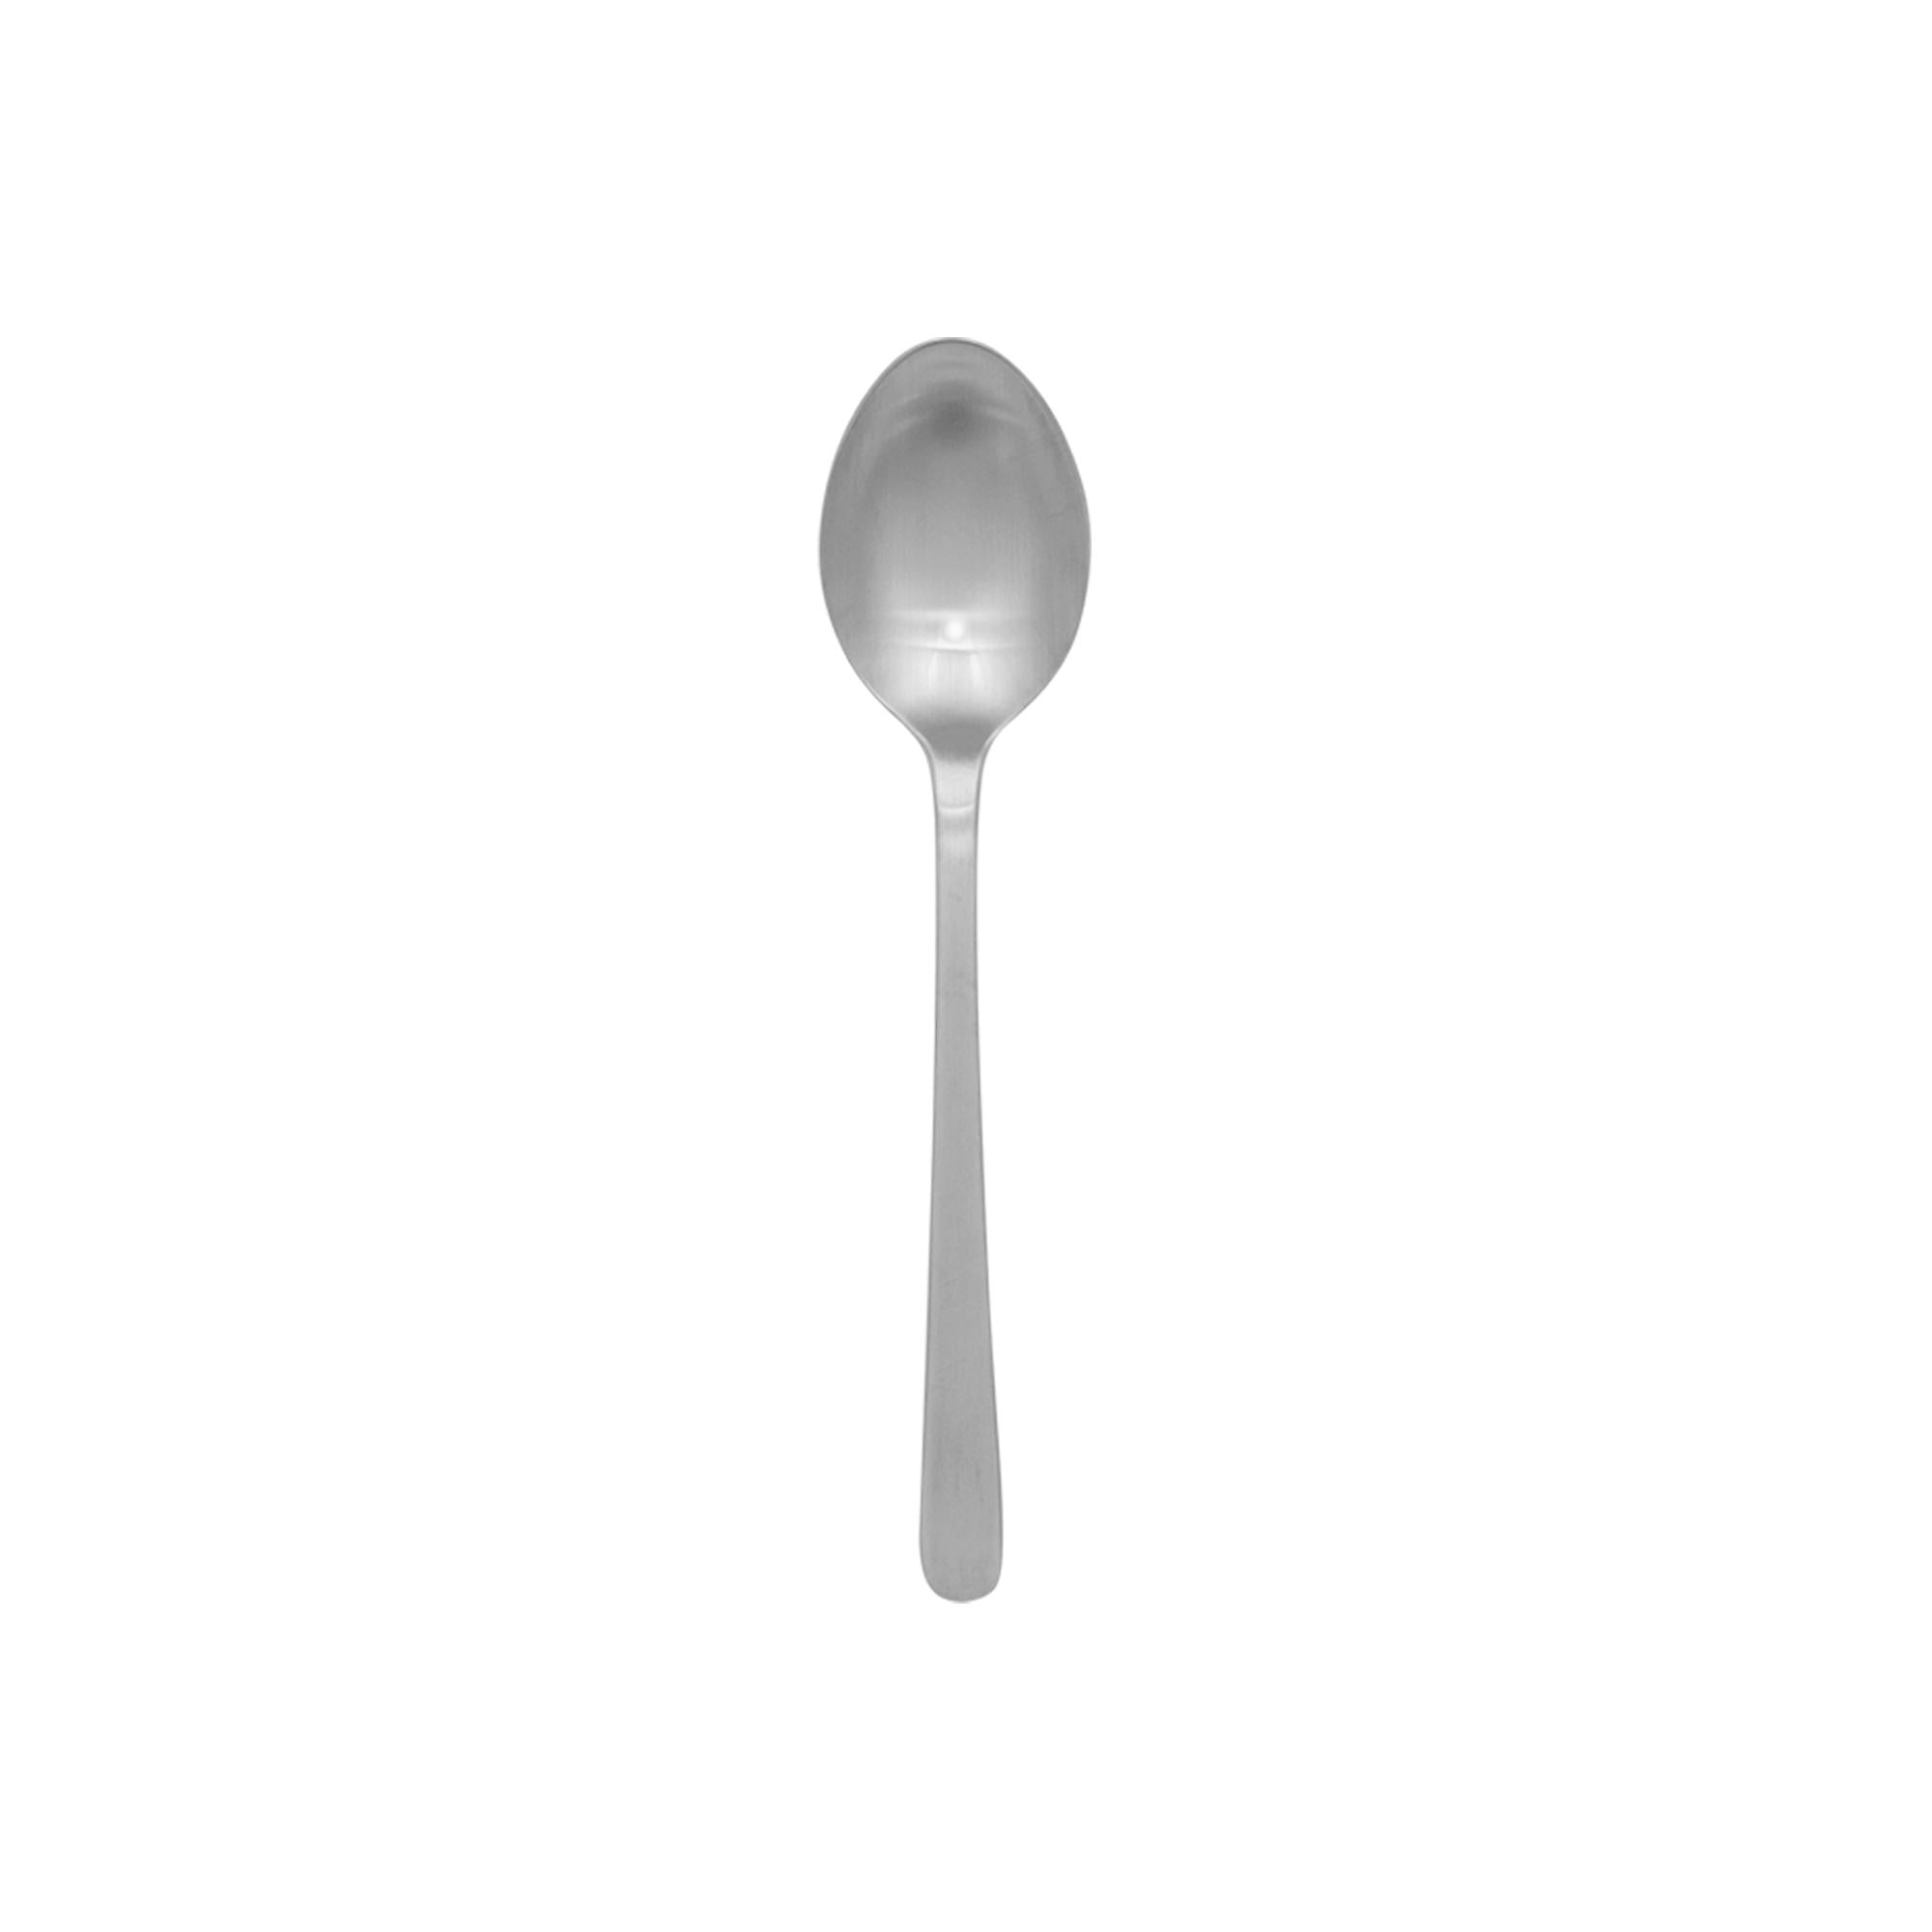 Kay Bojesen Grand Prix Dessert Spoon Small / Children's Spoon, Matte Steel